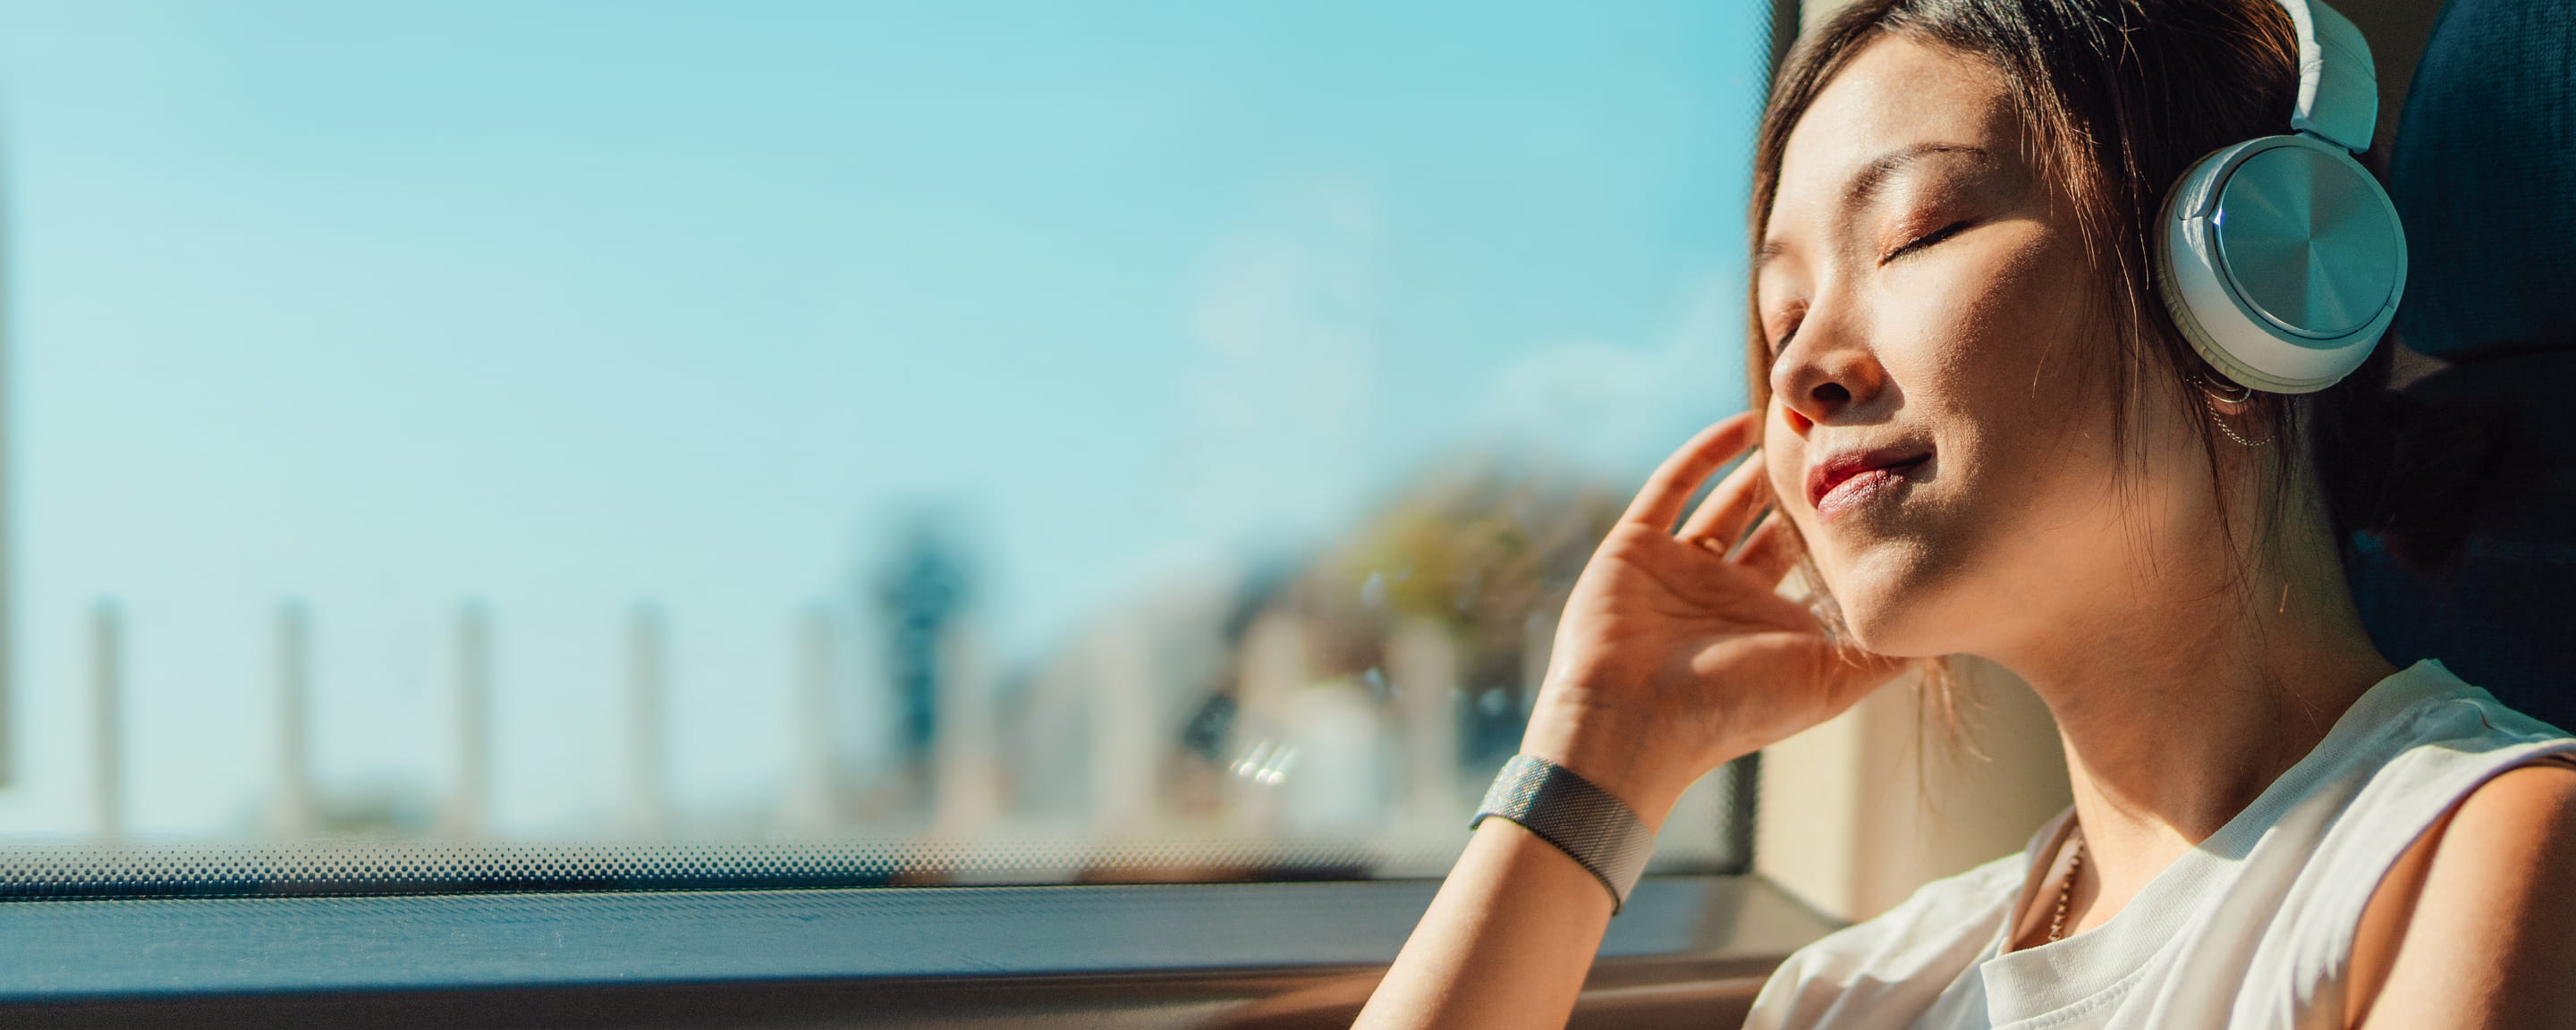 woman wearing headphones looking out train window